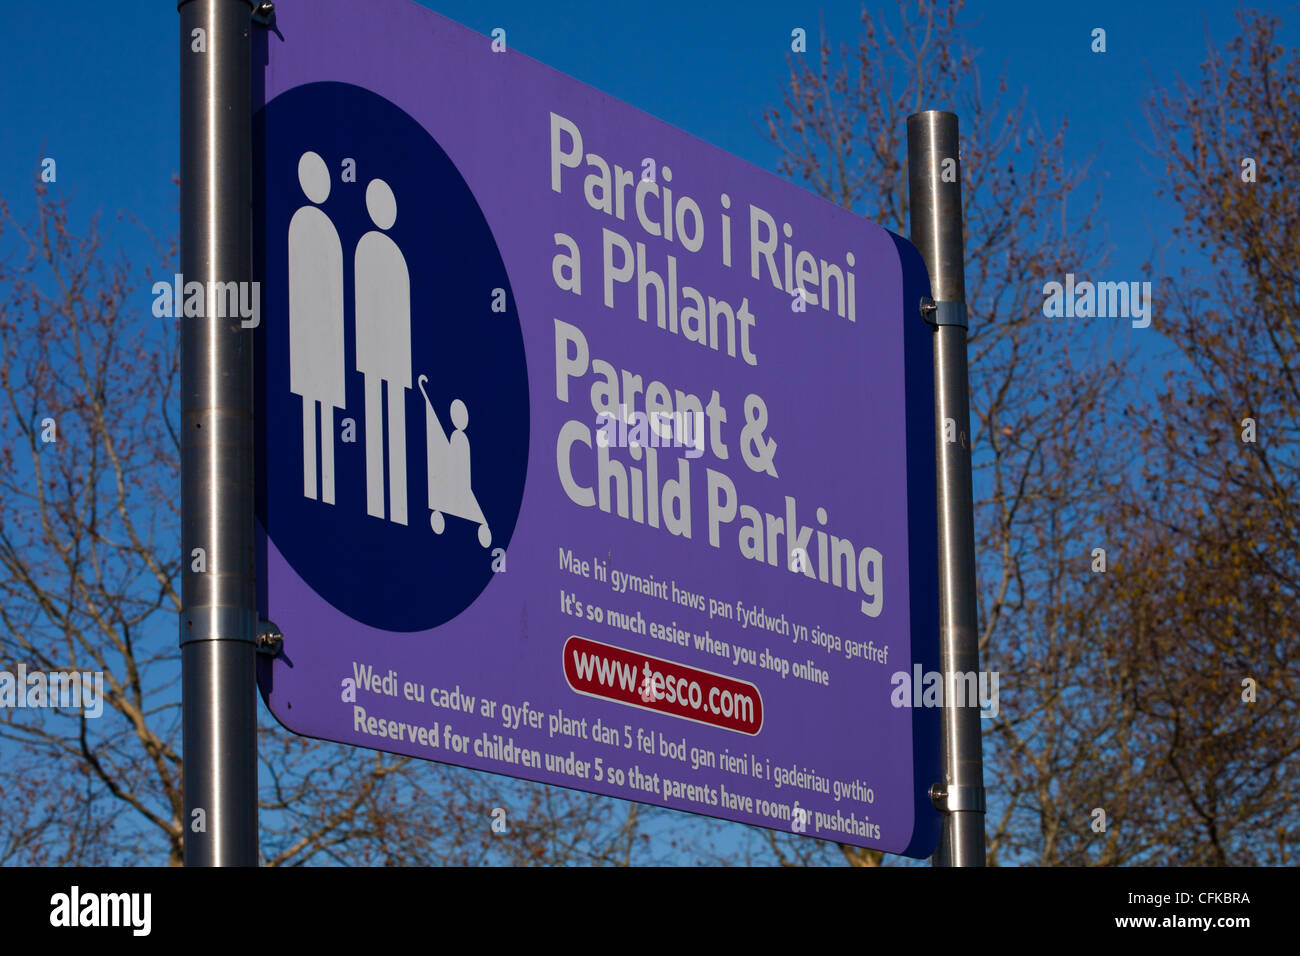 Bi-lingual parent & child parking area in tesco car park. Stock Photo